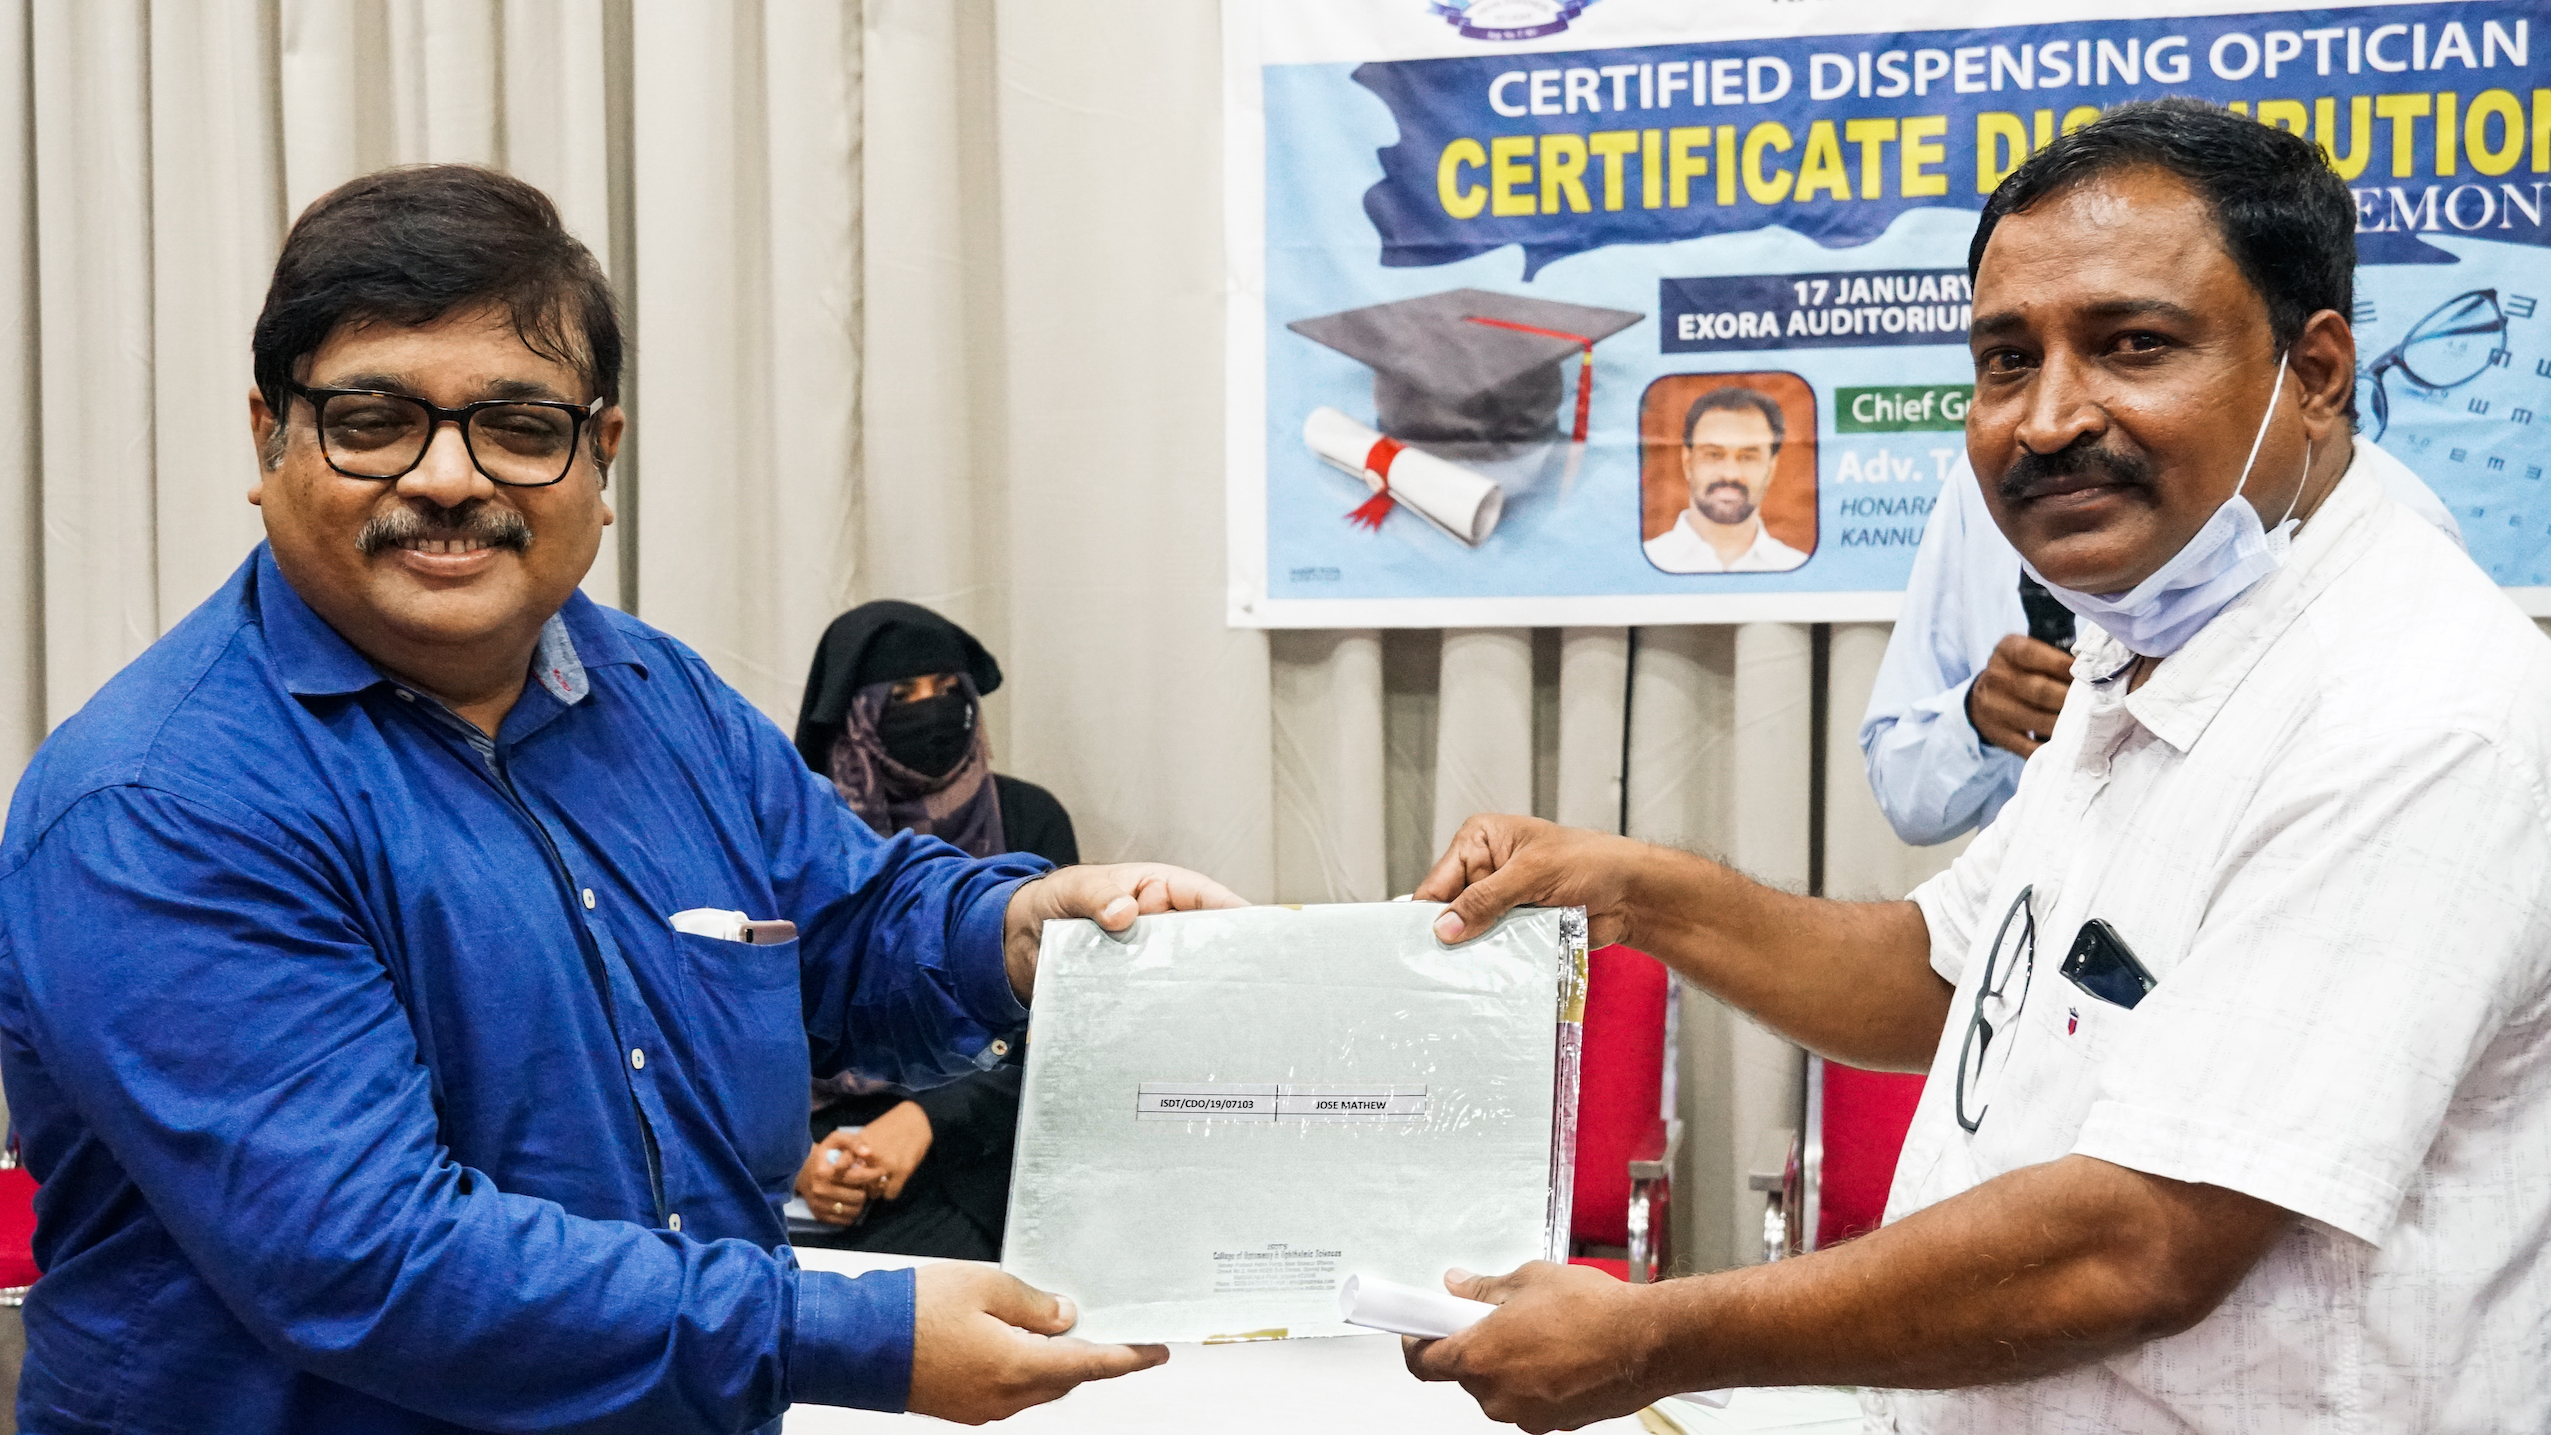 Mr.Jose Mathew Recieving Certificate From Mr.Devan C Joshi